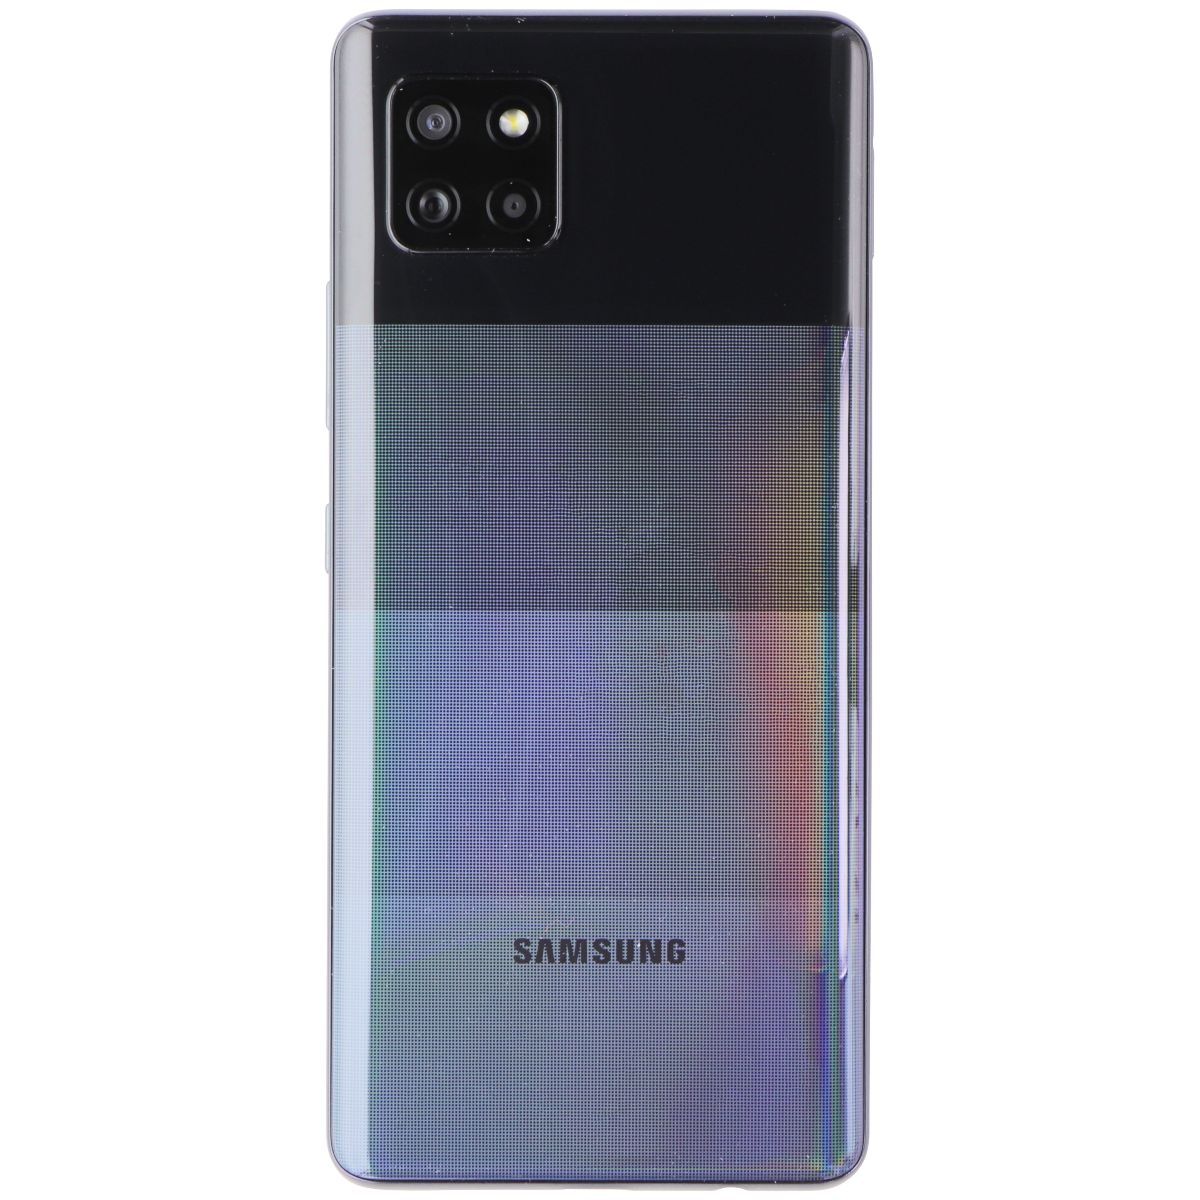 Samsung Galaxy A42 5G (6.6-inch) Smartphone (SM-A426U) Verizon - 128GB/Black Cell Phones & Smartphones Samsung    - Simple Cell Bulk Wholesale Pricing - USA Seller